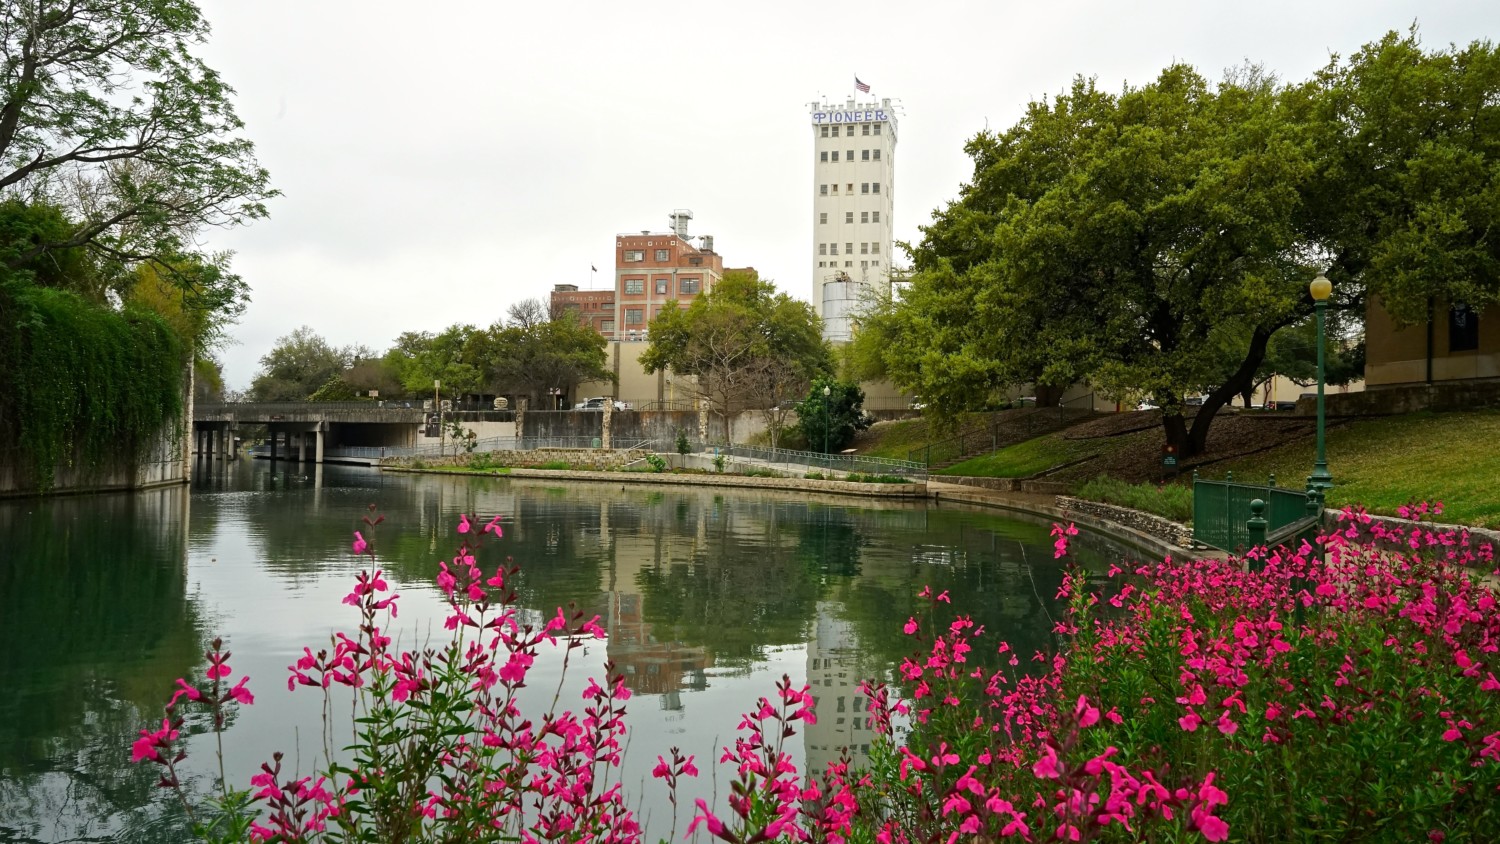 Texas' Top Pet Friendly Attraction: The San Antonio River Walk | GoPetFriendly.com